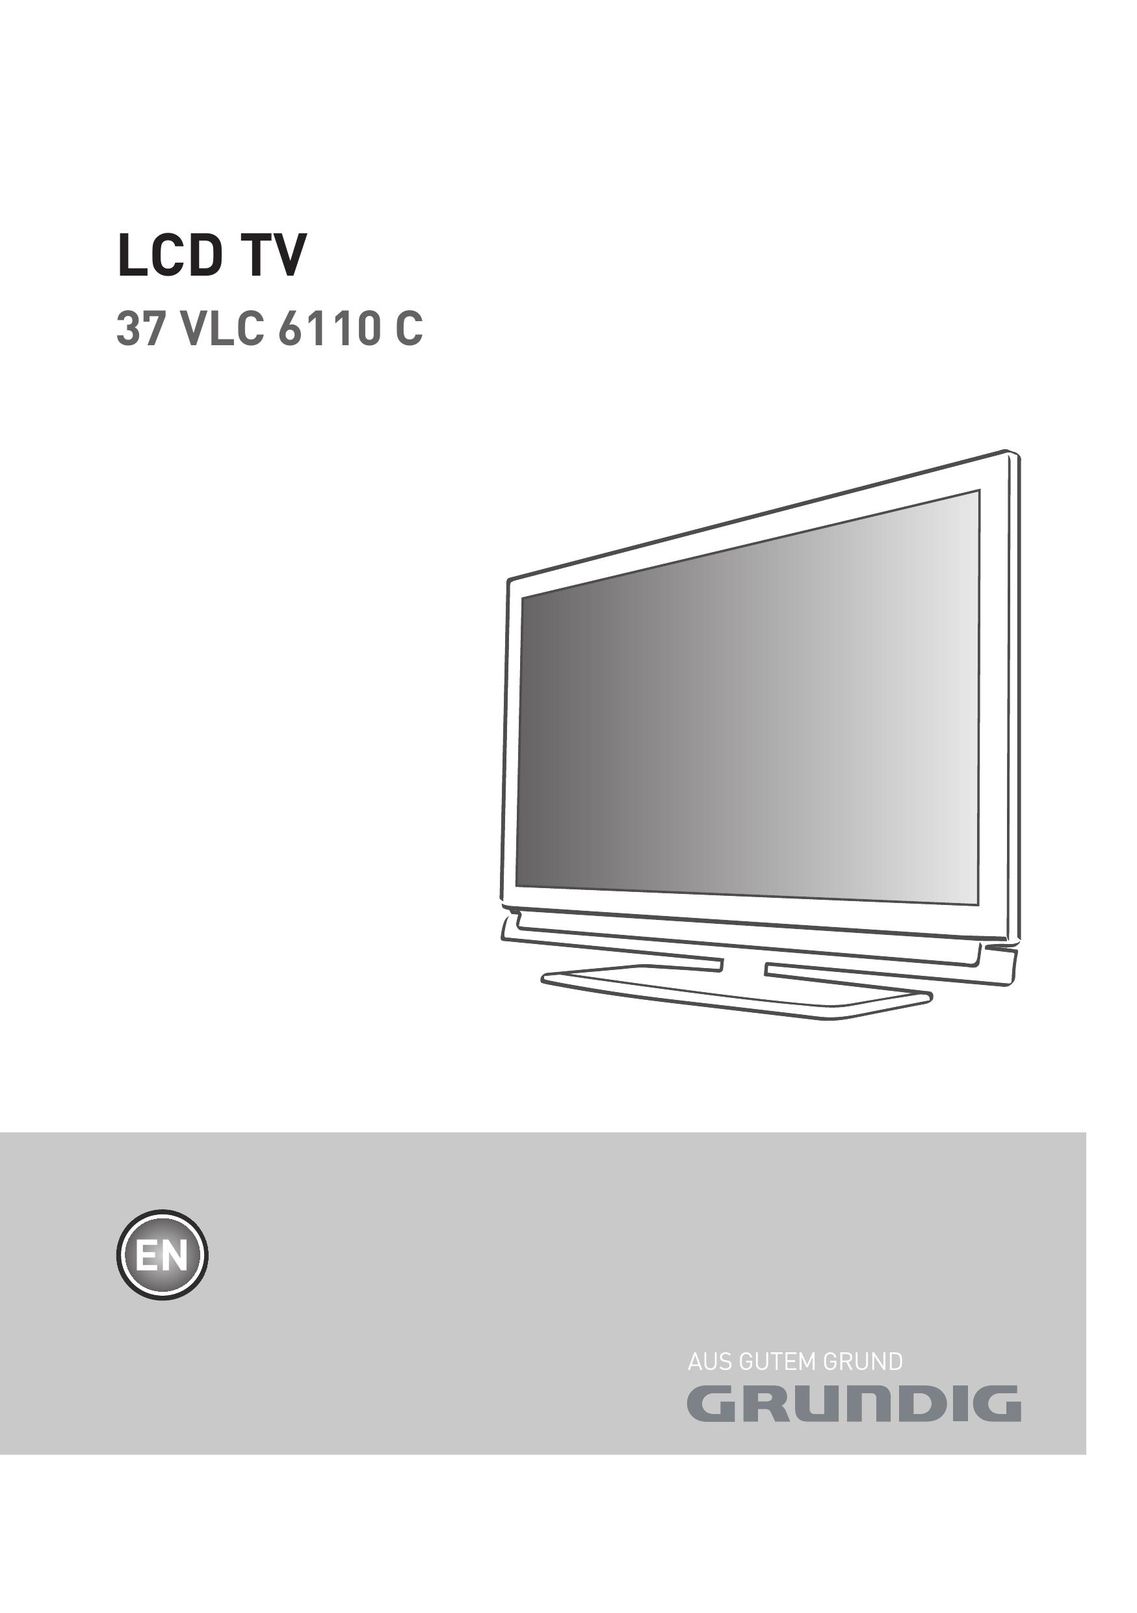 Grundig 37 VLC 6110 C Flat Panel Television User Manual